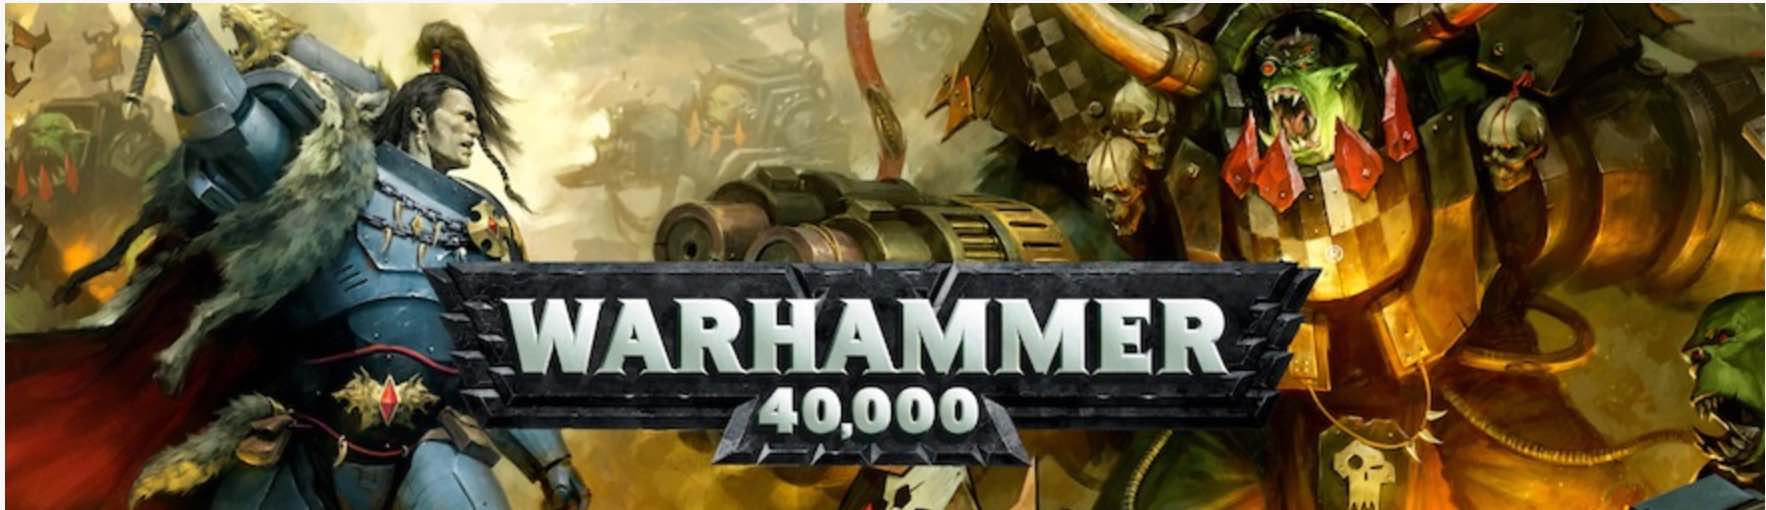 warhammer40000.jpg